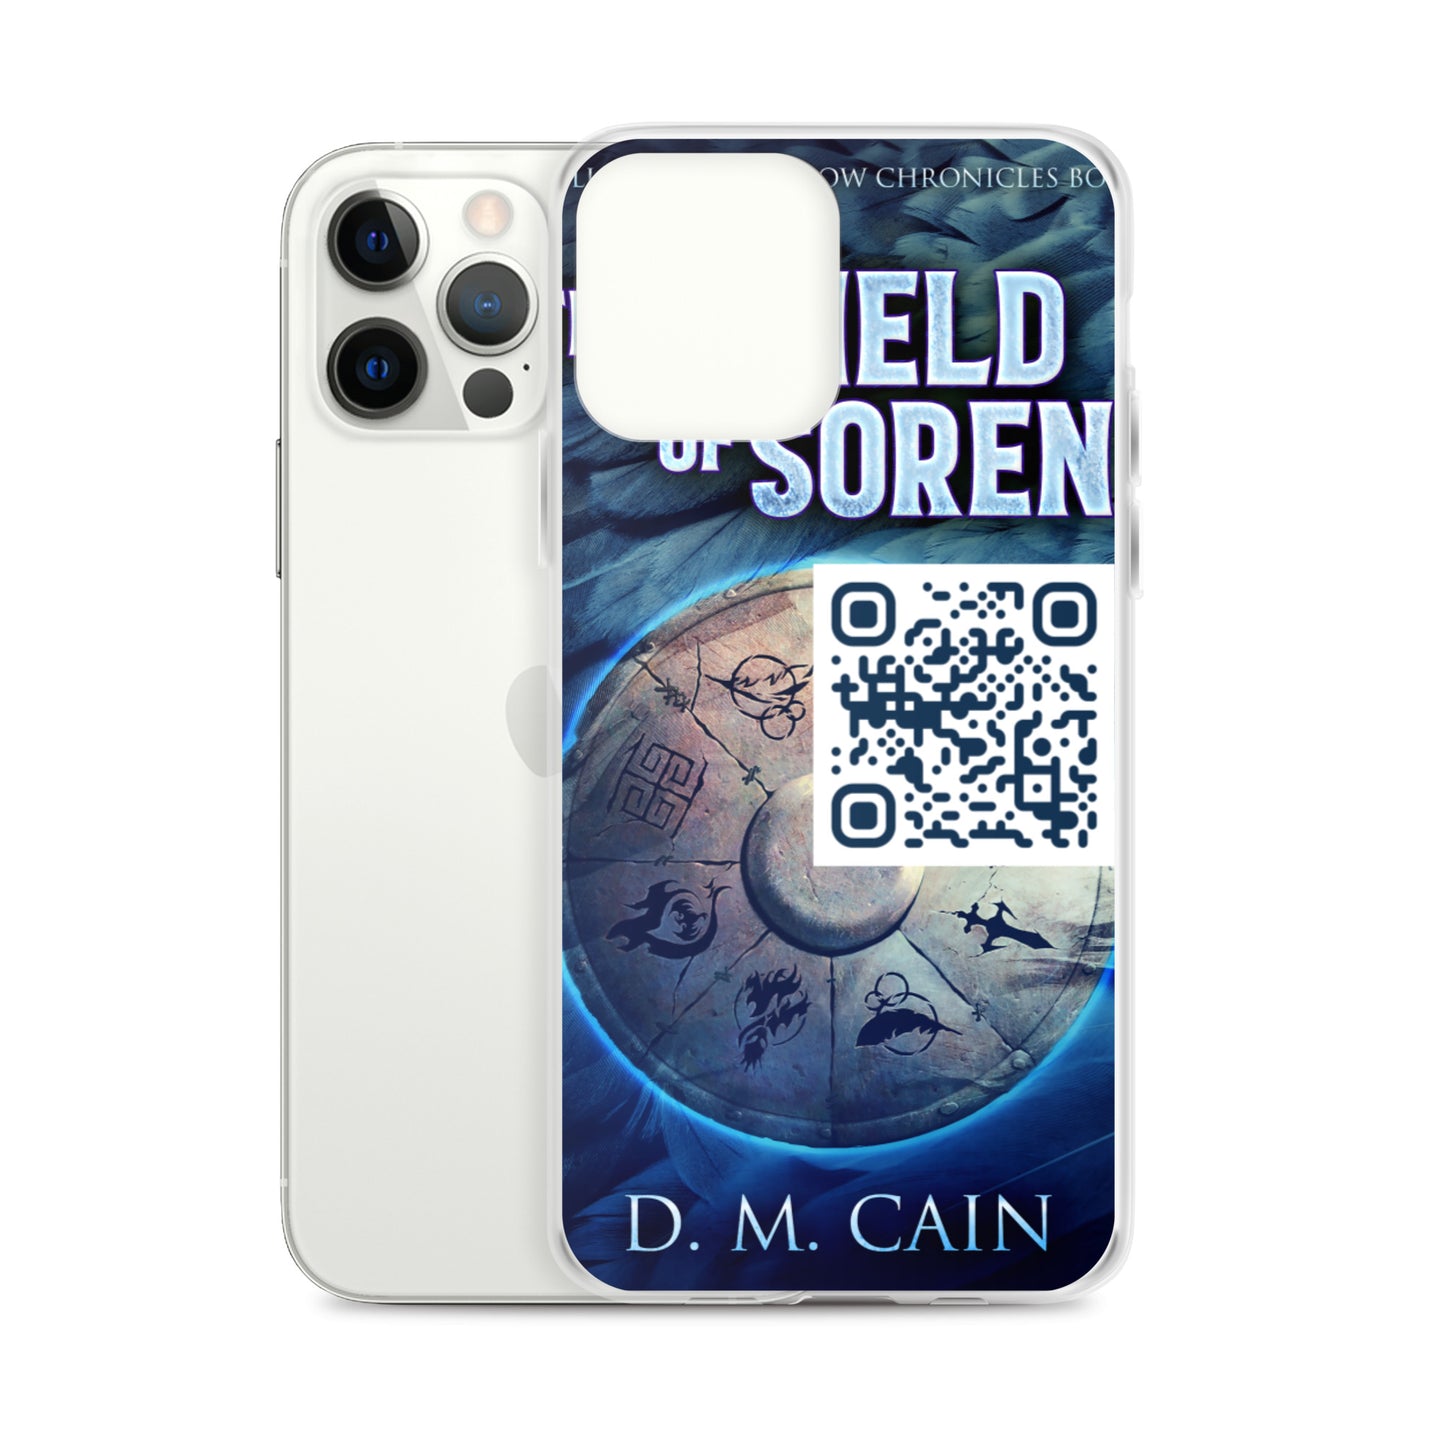 The Shield of Soren - iPhone Case